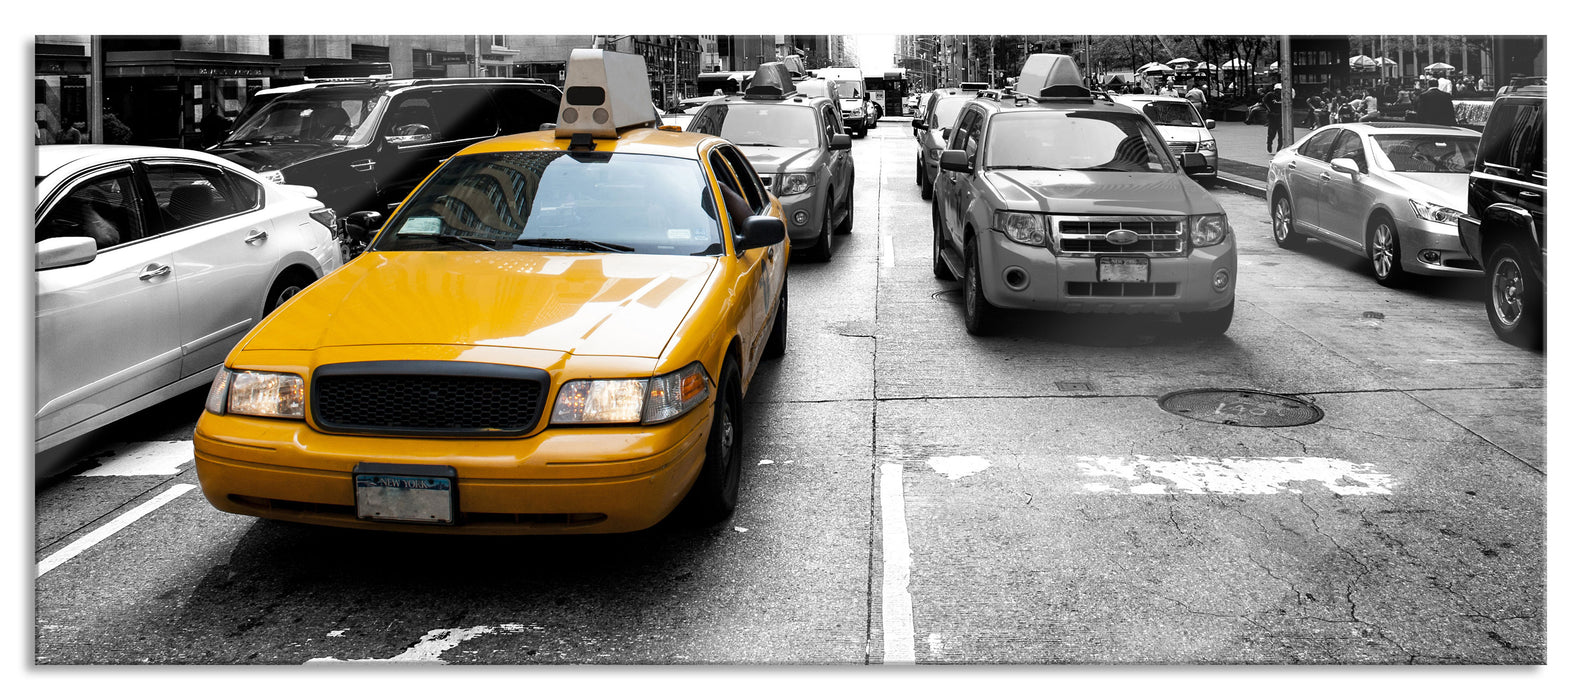 Gelbes Taxi in New York, Glasbild Panorama